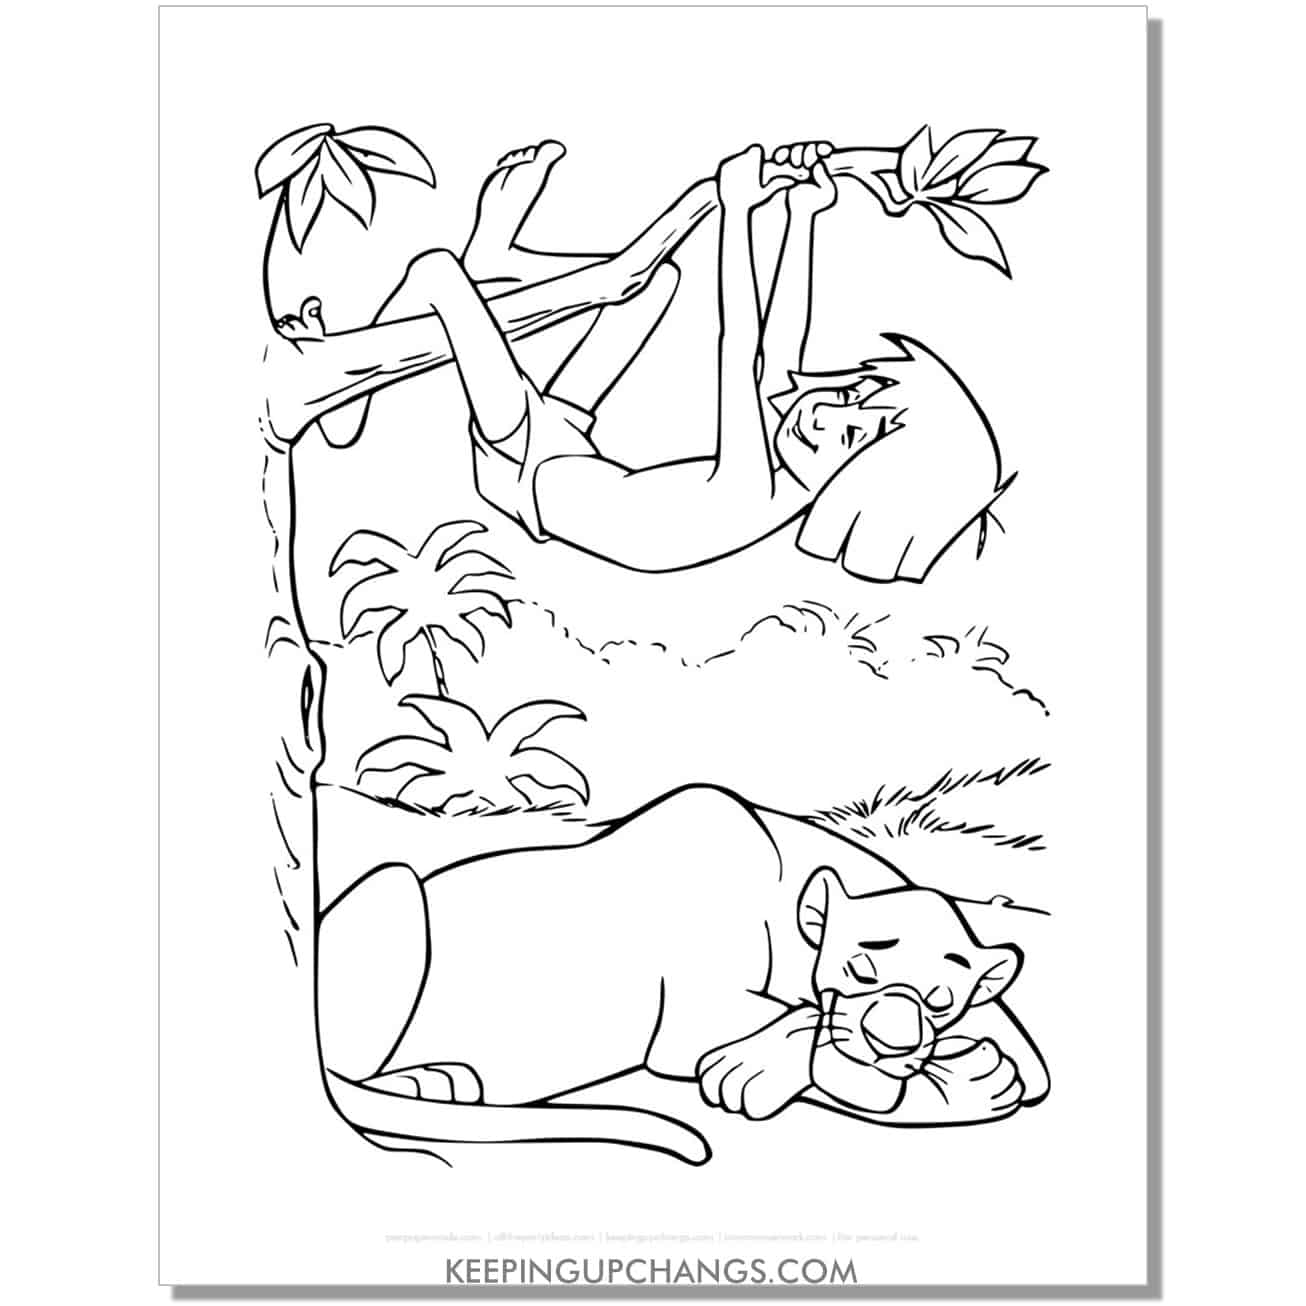 bagheera resting, mowgli climbing tree jungle book coloring page, sheet.